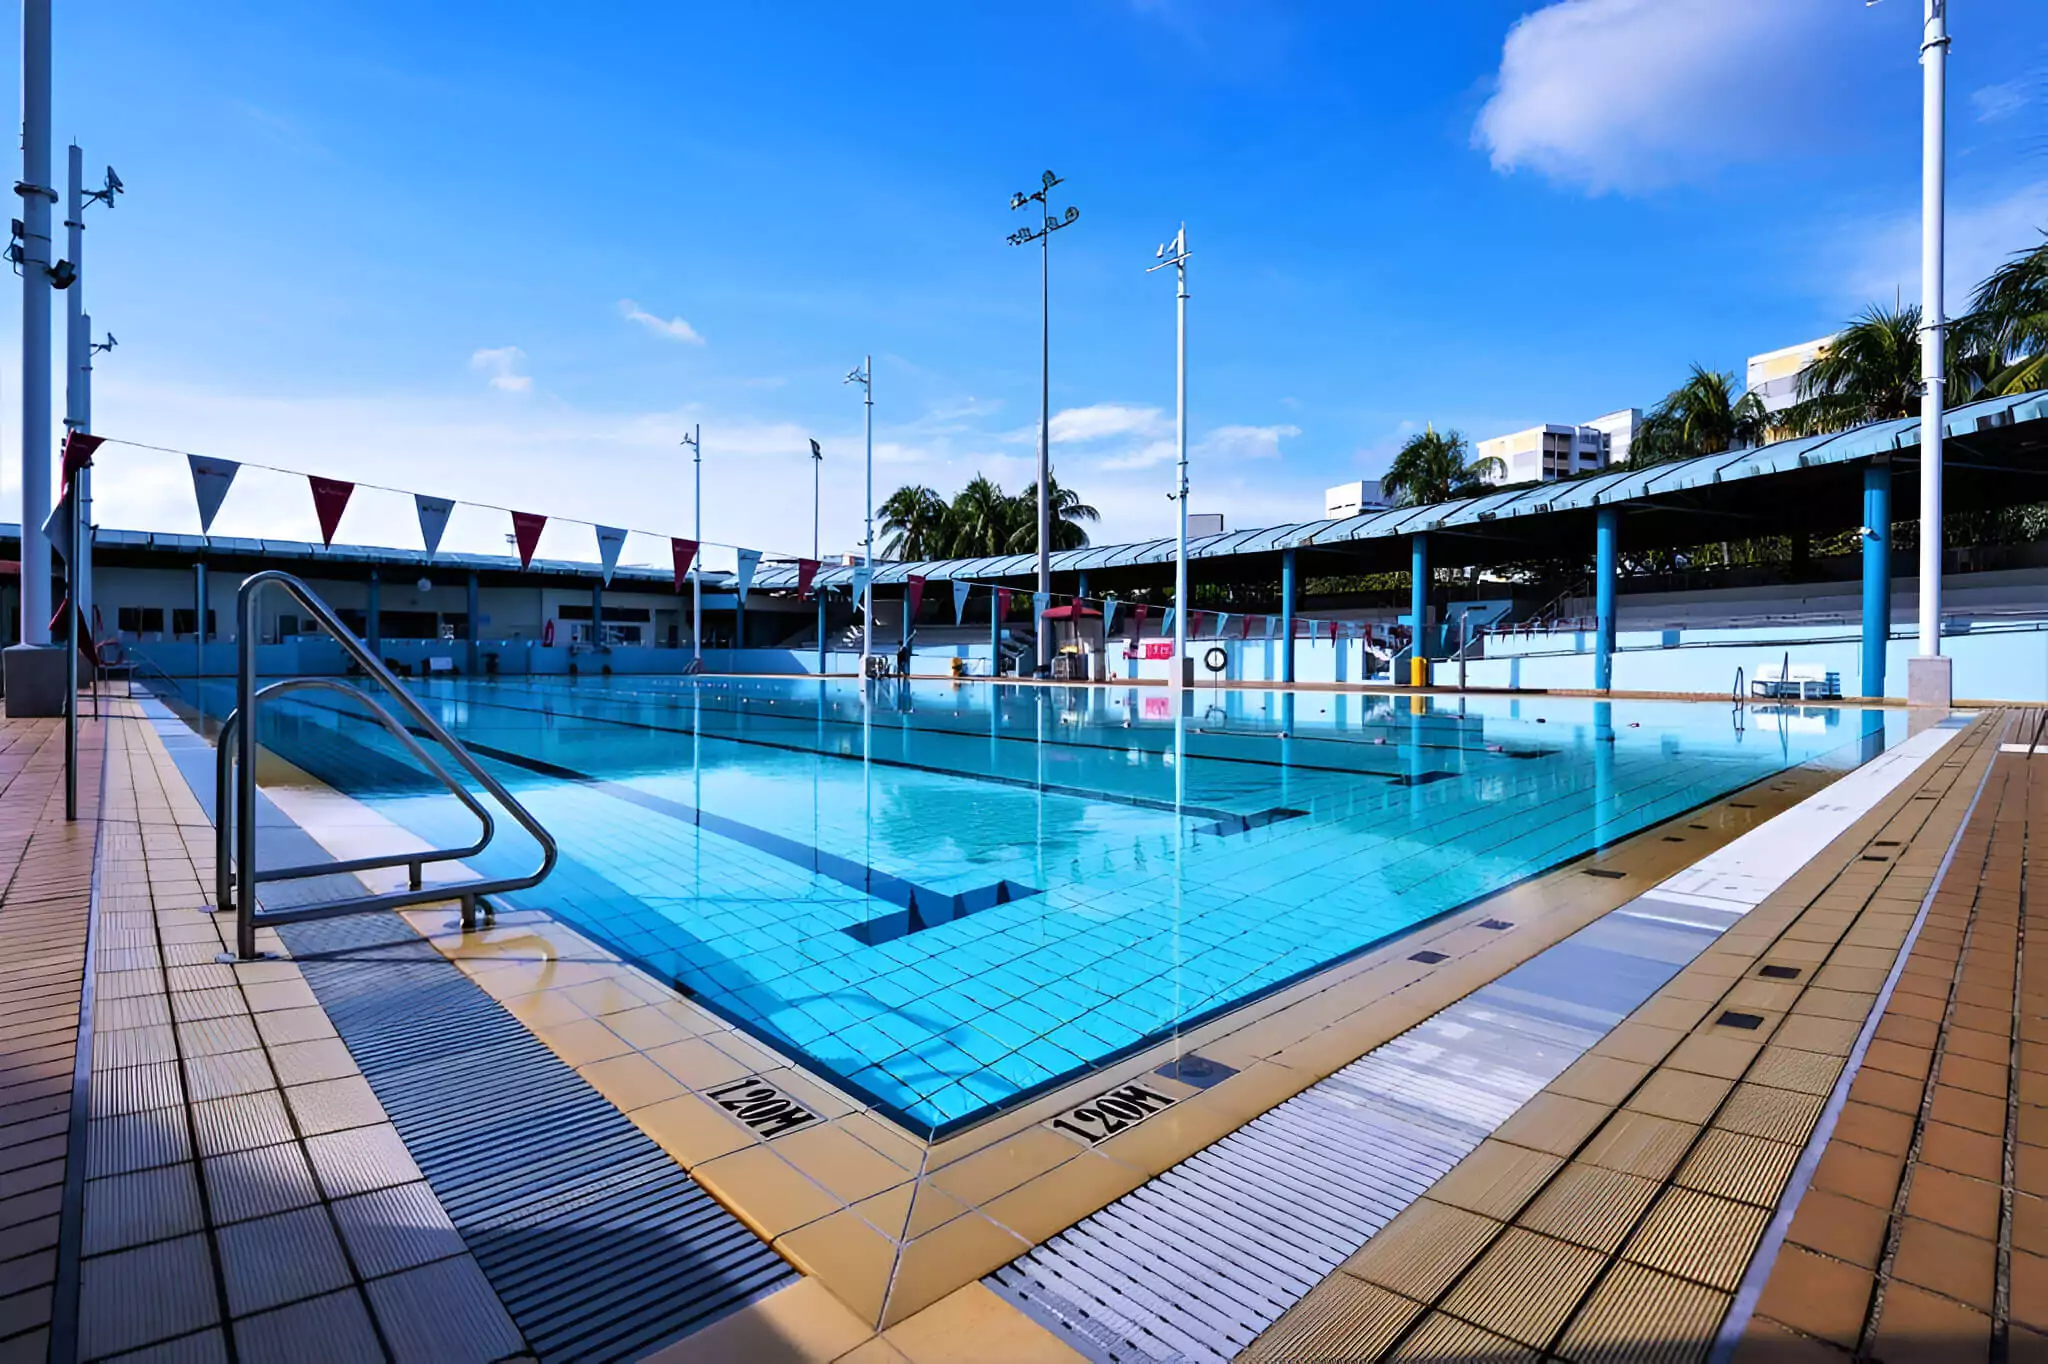 Serangoon Swimming Complex with Swim101